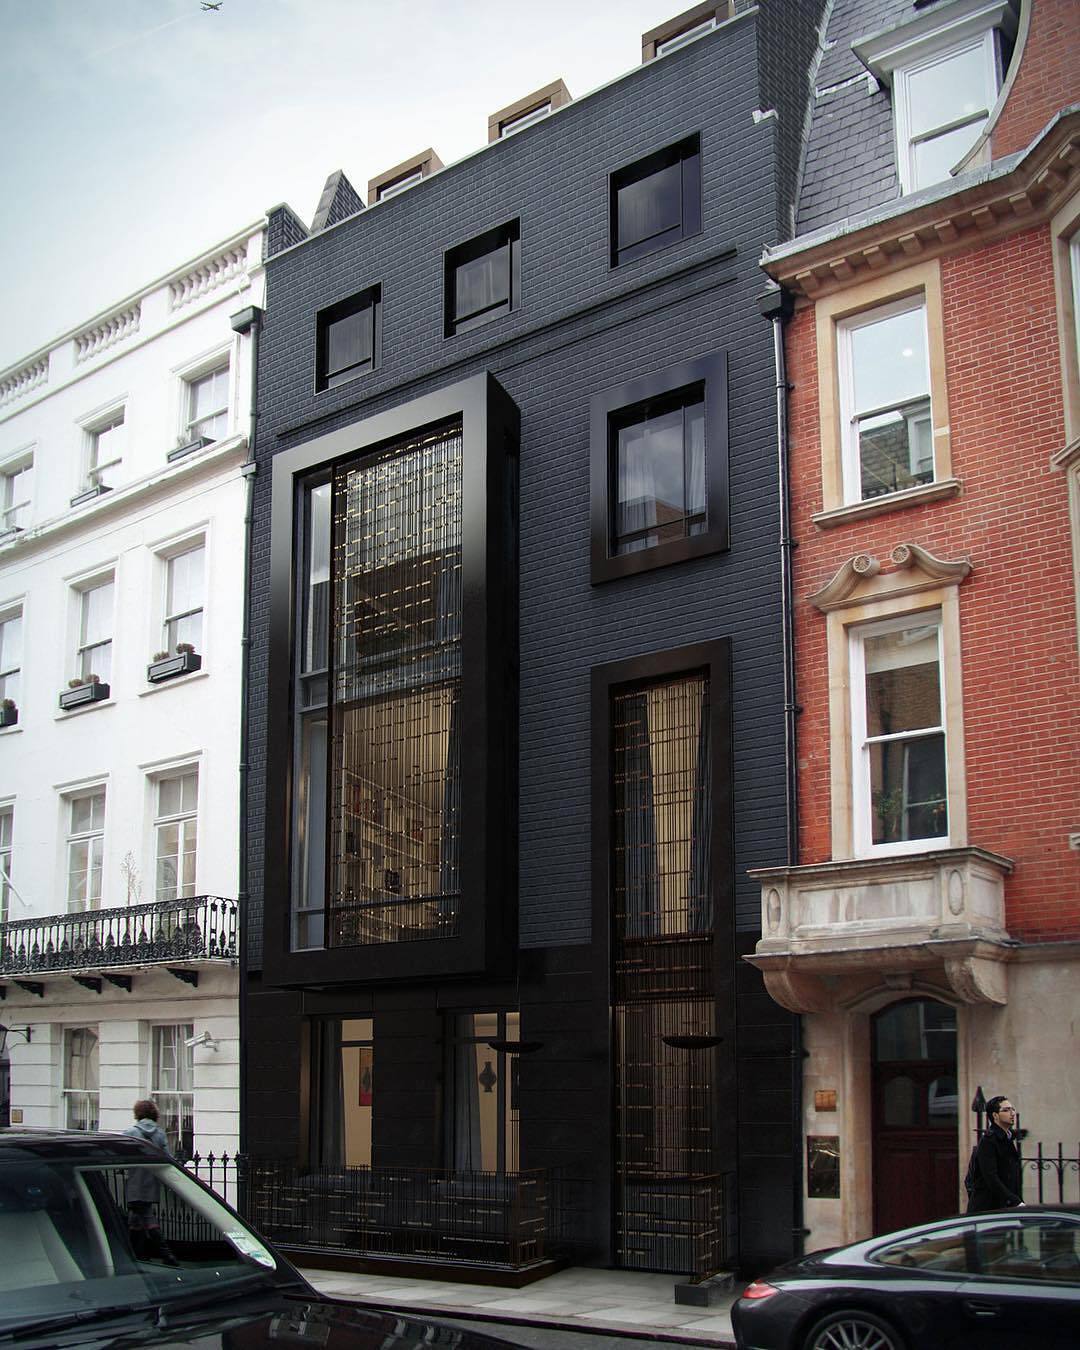 1080x1350, 217 Kb / лондон, фасад, черный